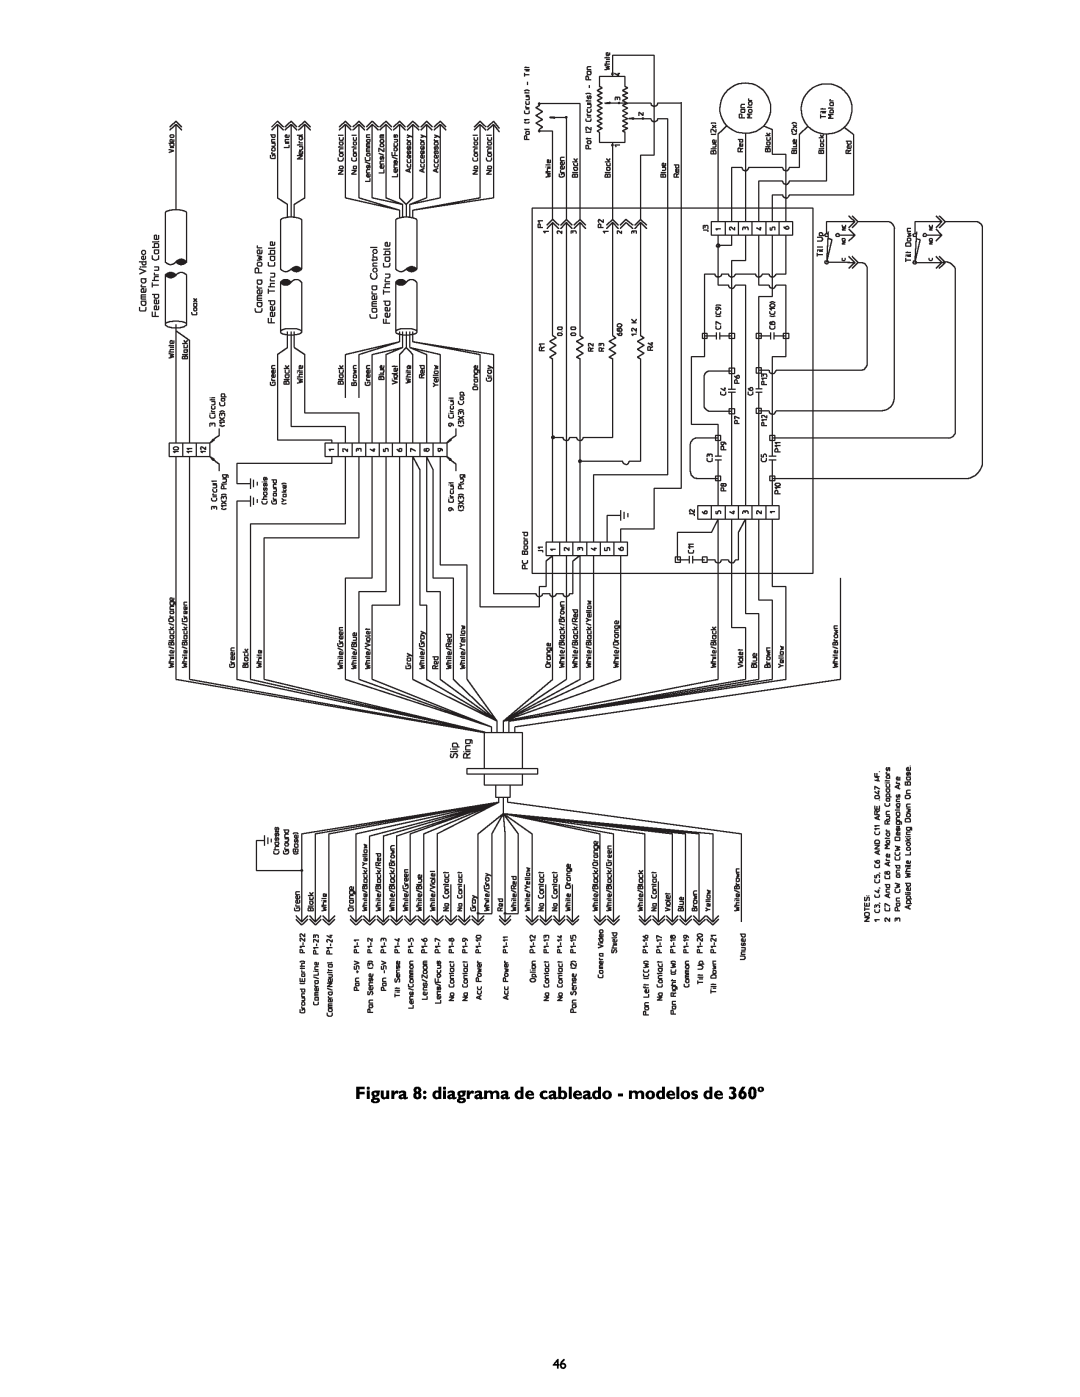 Bosch Appliances LTC 9418, LTC 9420, LTC 9440, LTC 9441 Figura 8: diagrama de cableado - modelos de 360º, Control 